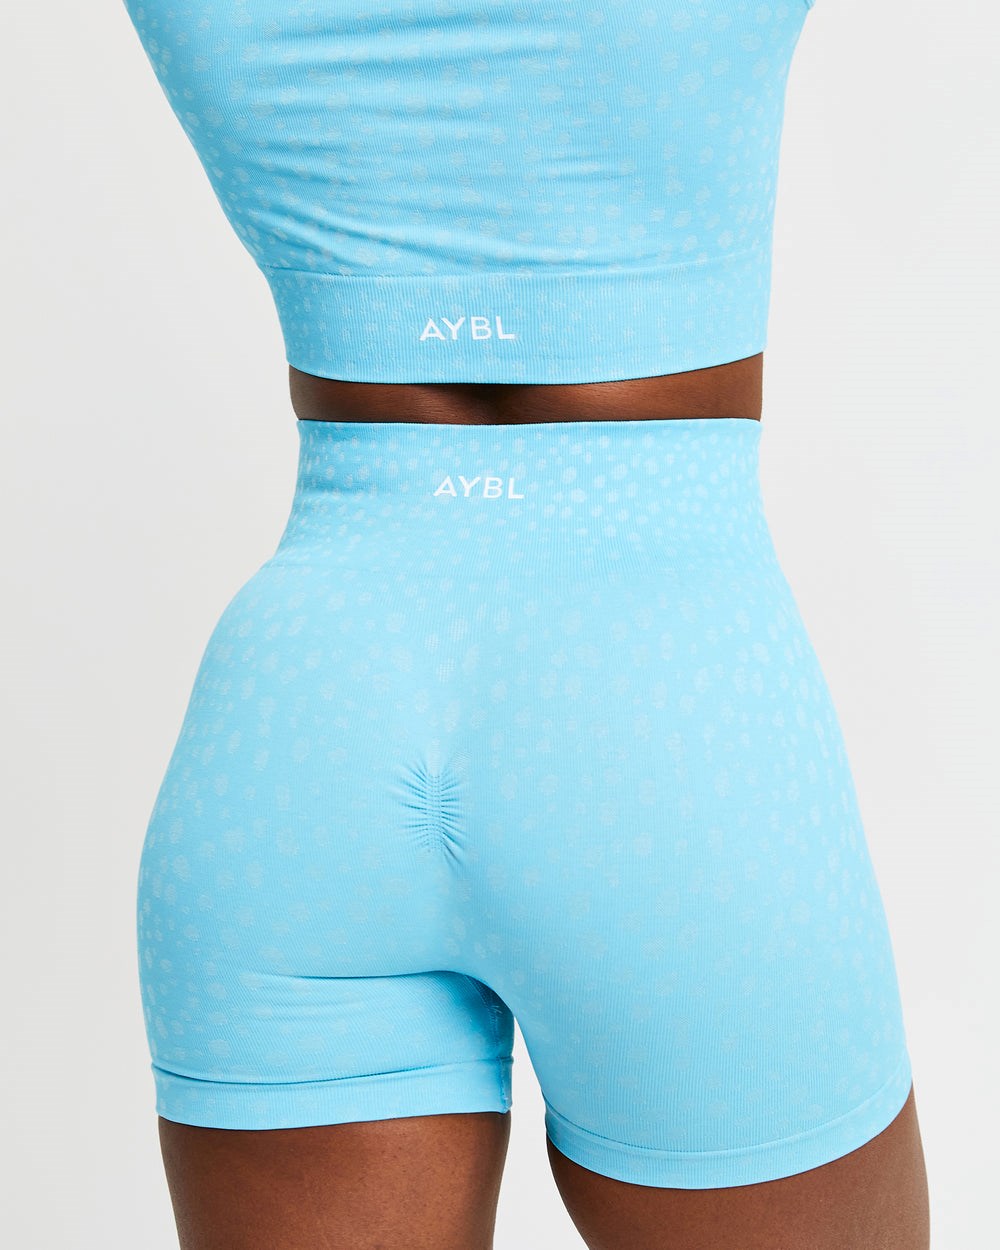 Bermudas AYBL Mujer Black Friday - Evolve Speckle Seamless Shorts